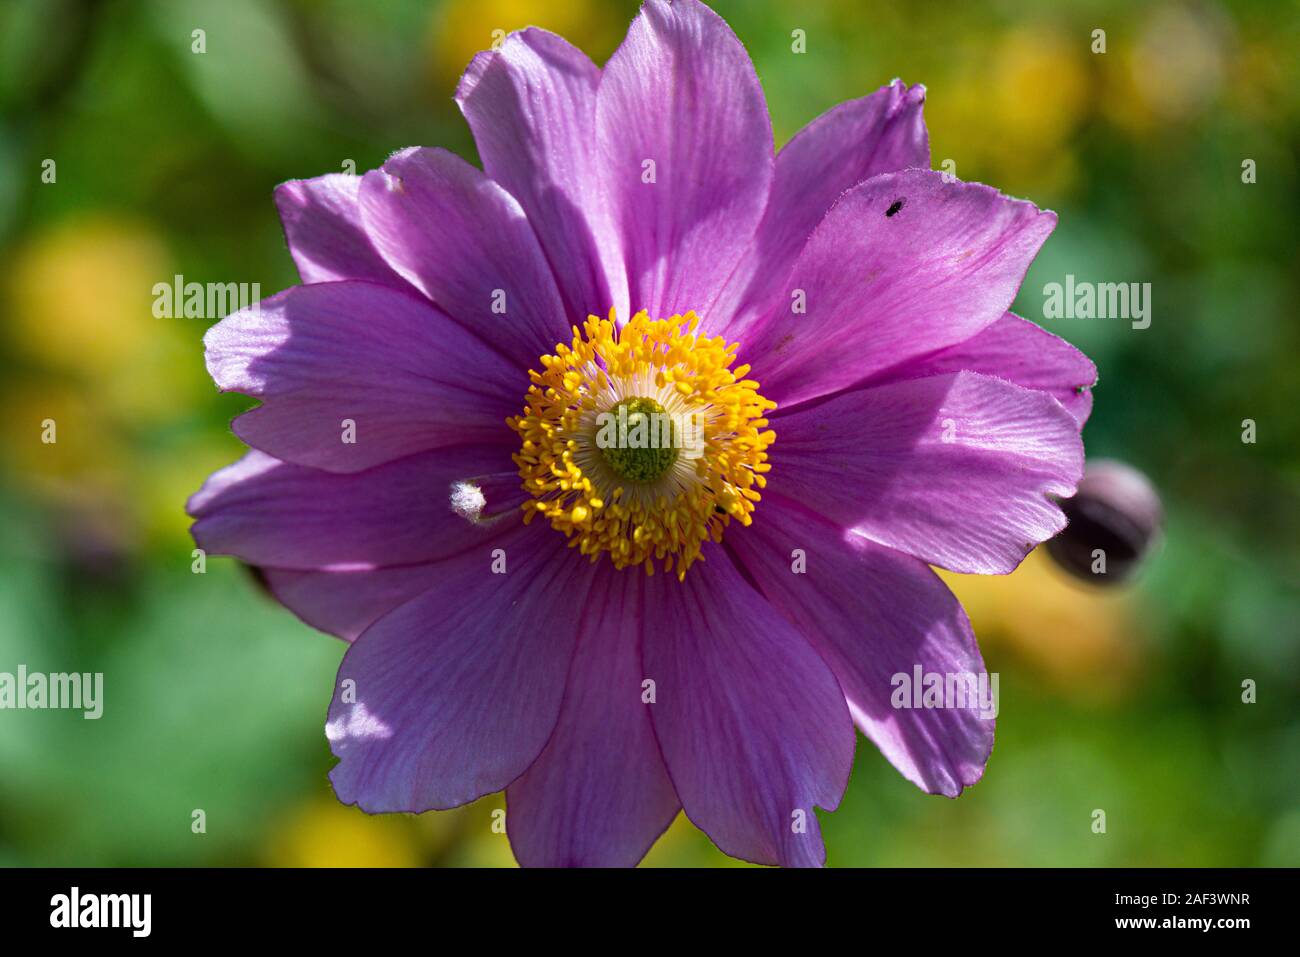 The flower of a Japanese anemone (Anemone × hybrida) Stock Photo